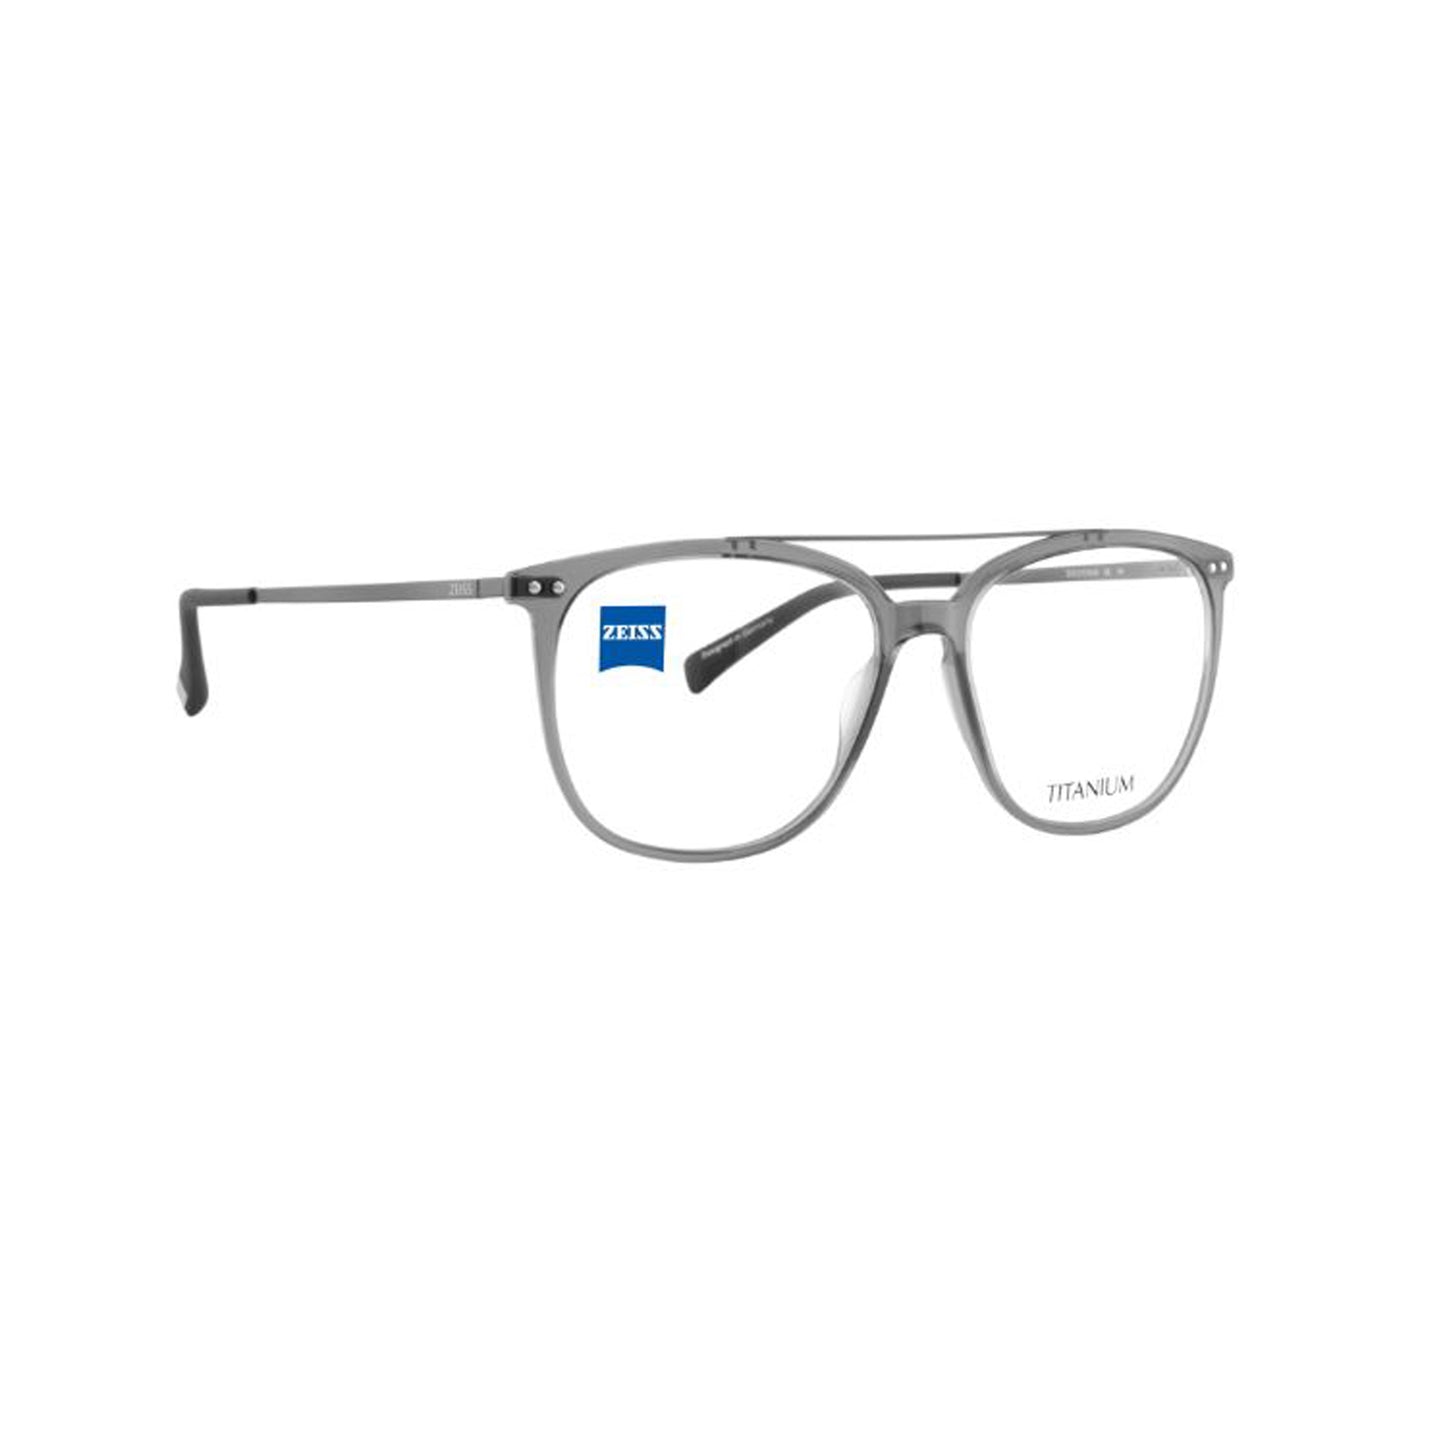 Zeiss Eyewear Grey Aviator Acetate Full Rim Eyeglasses. Made in Germany ZS20028-Y21